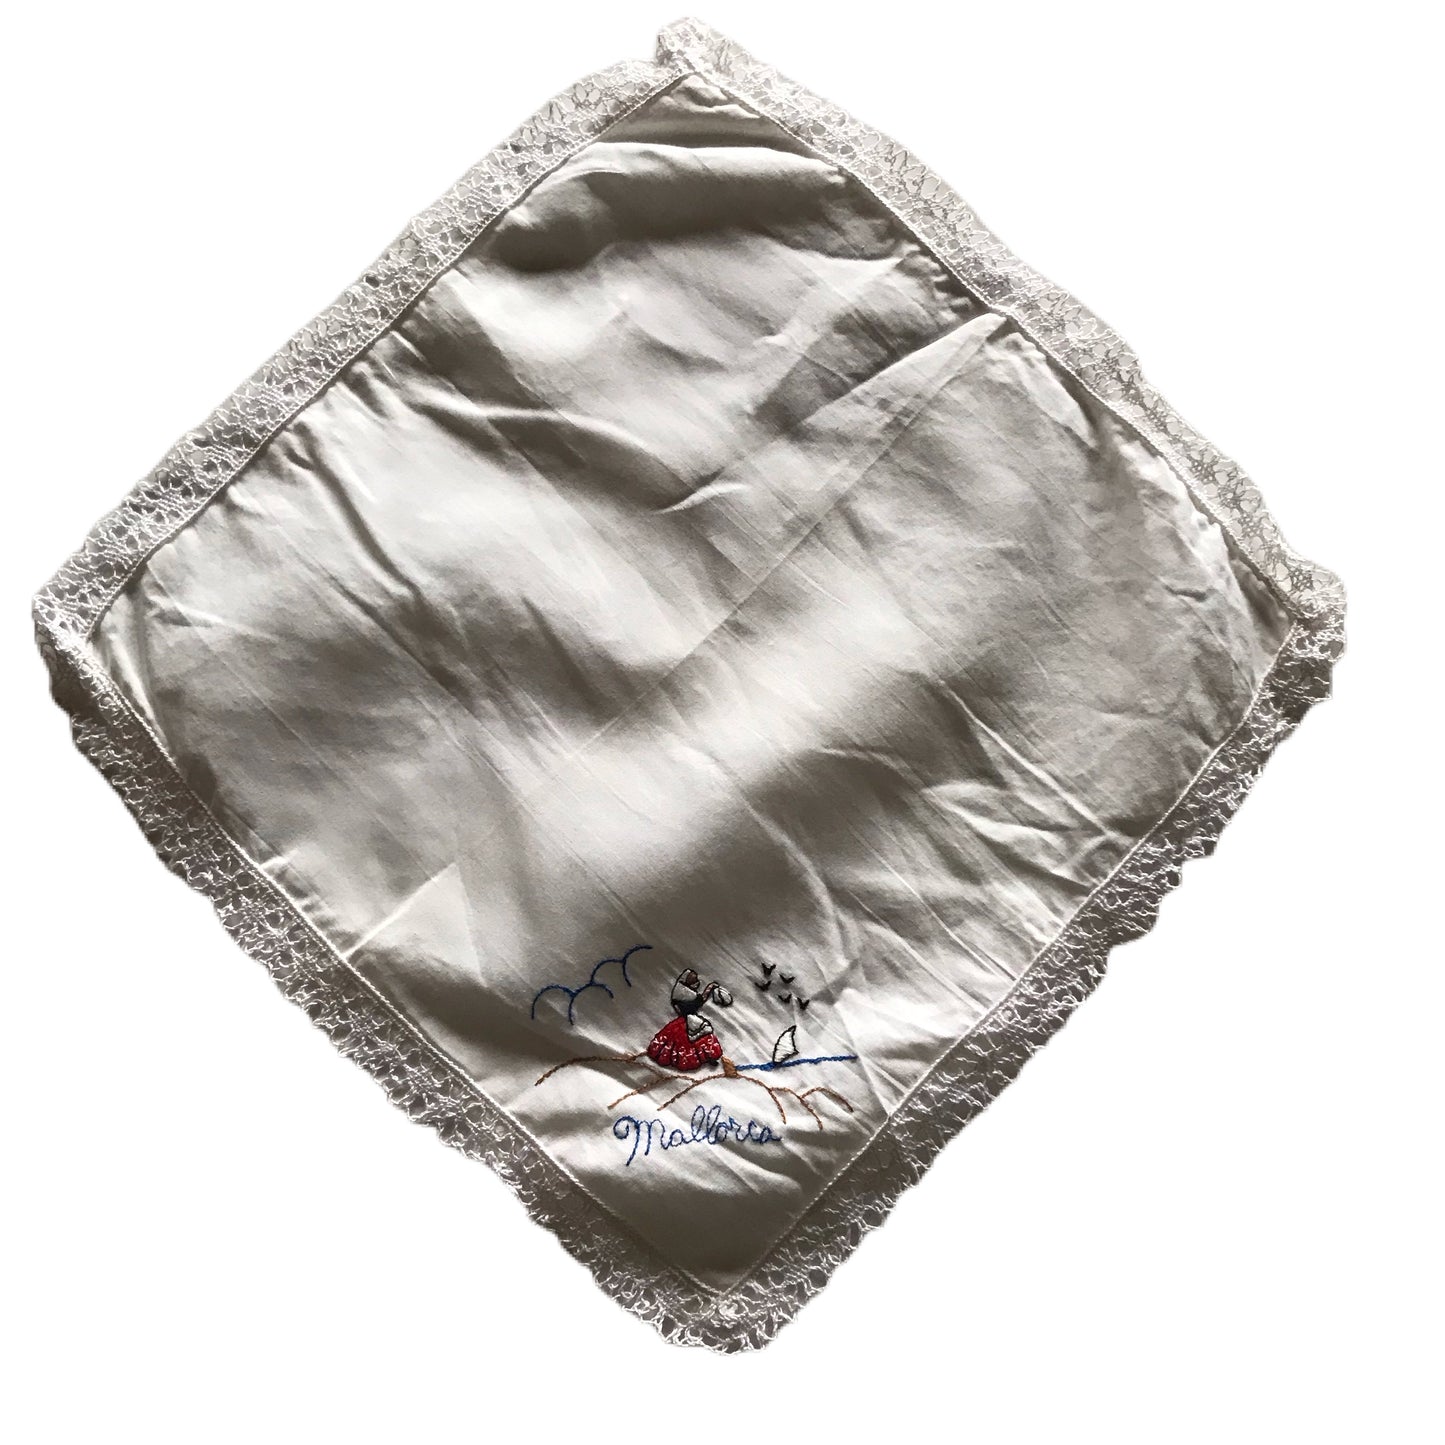 Mallorca Embroidered and Tatted Cotton Handkerchief circa 1940s